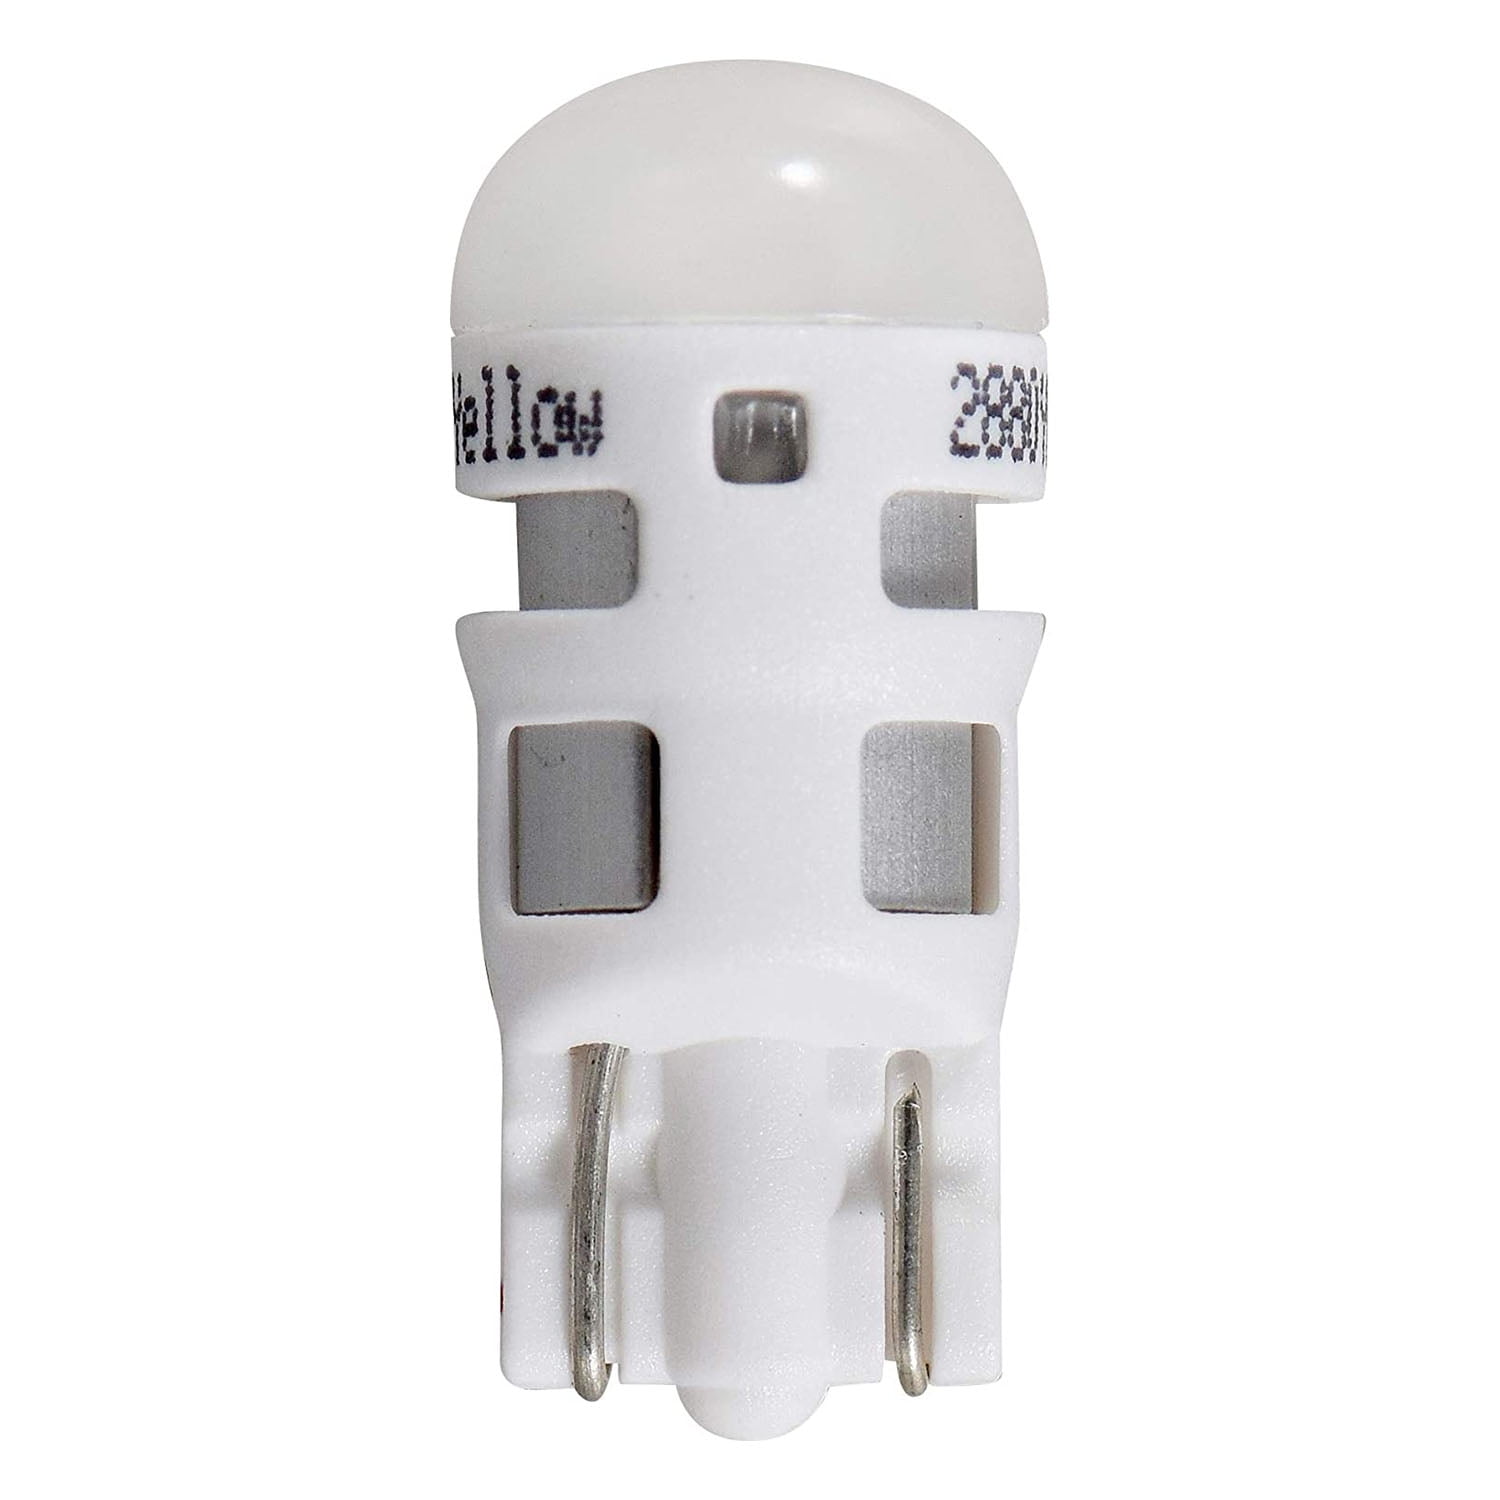 Contains 2 bulbs SYLVANIA ZEVO 168 T10 W5W Amber LED Bulb, 